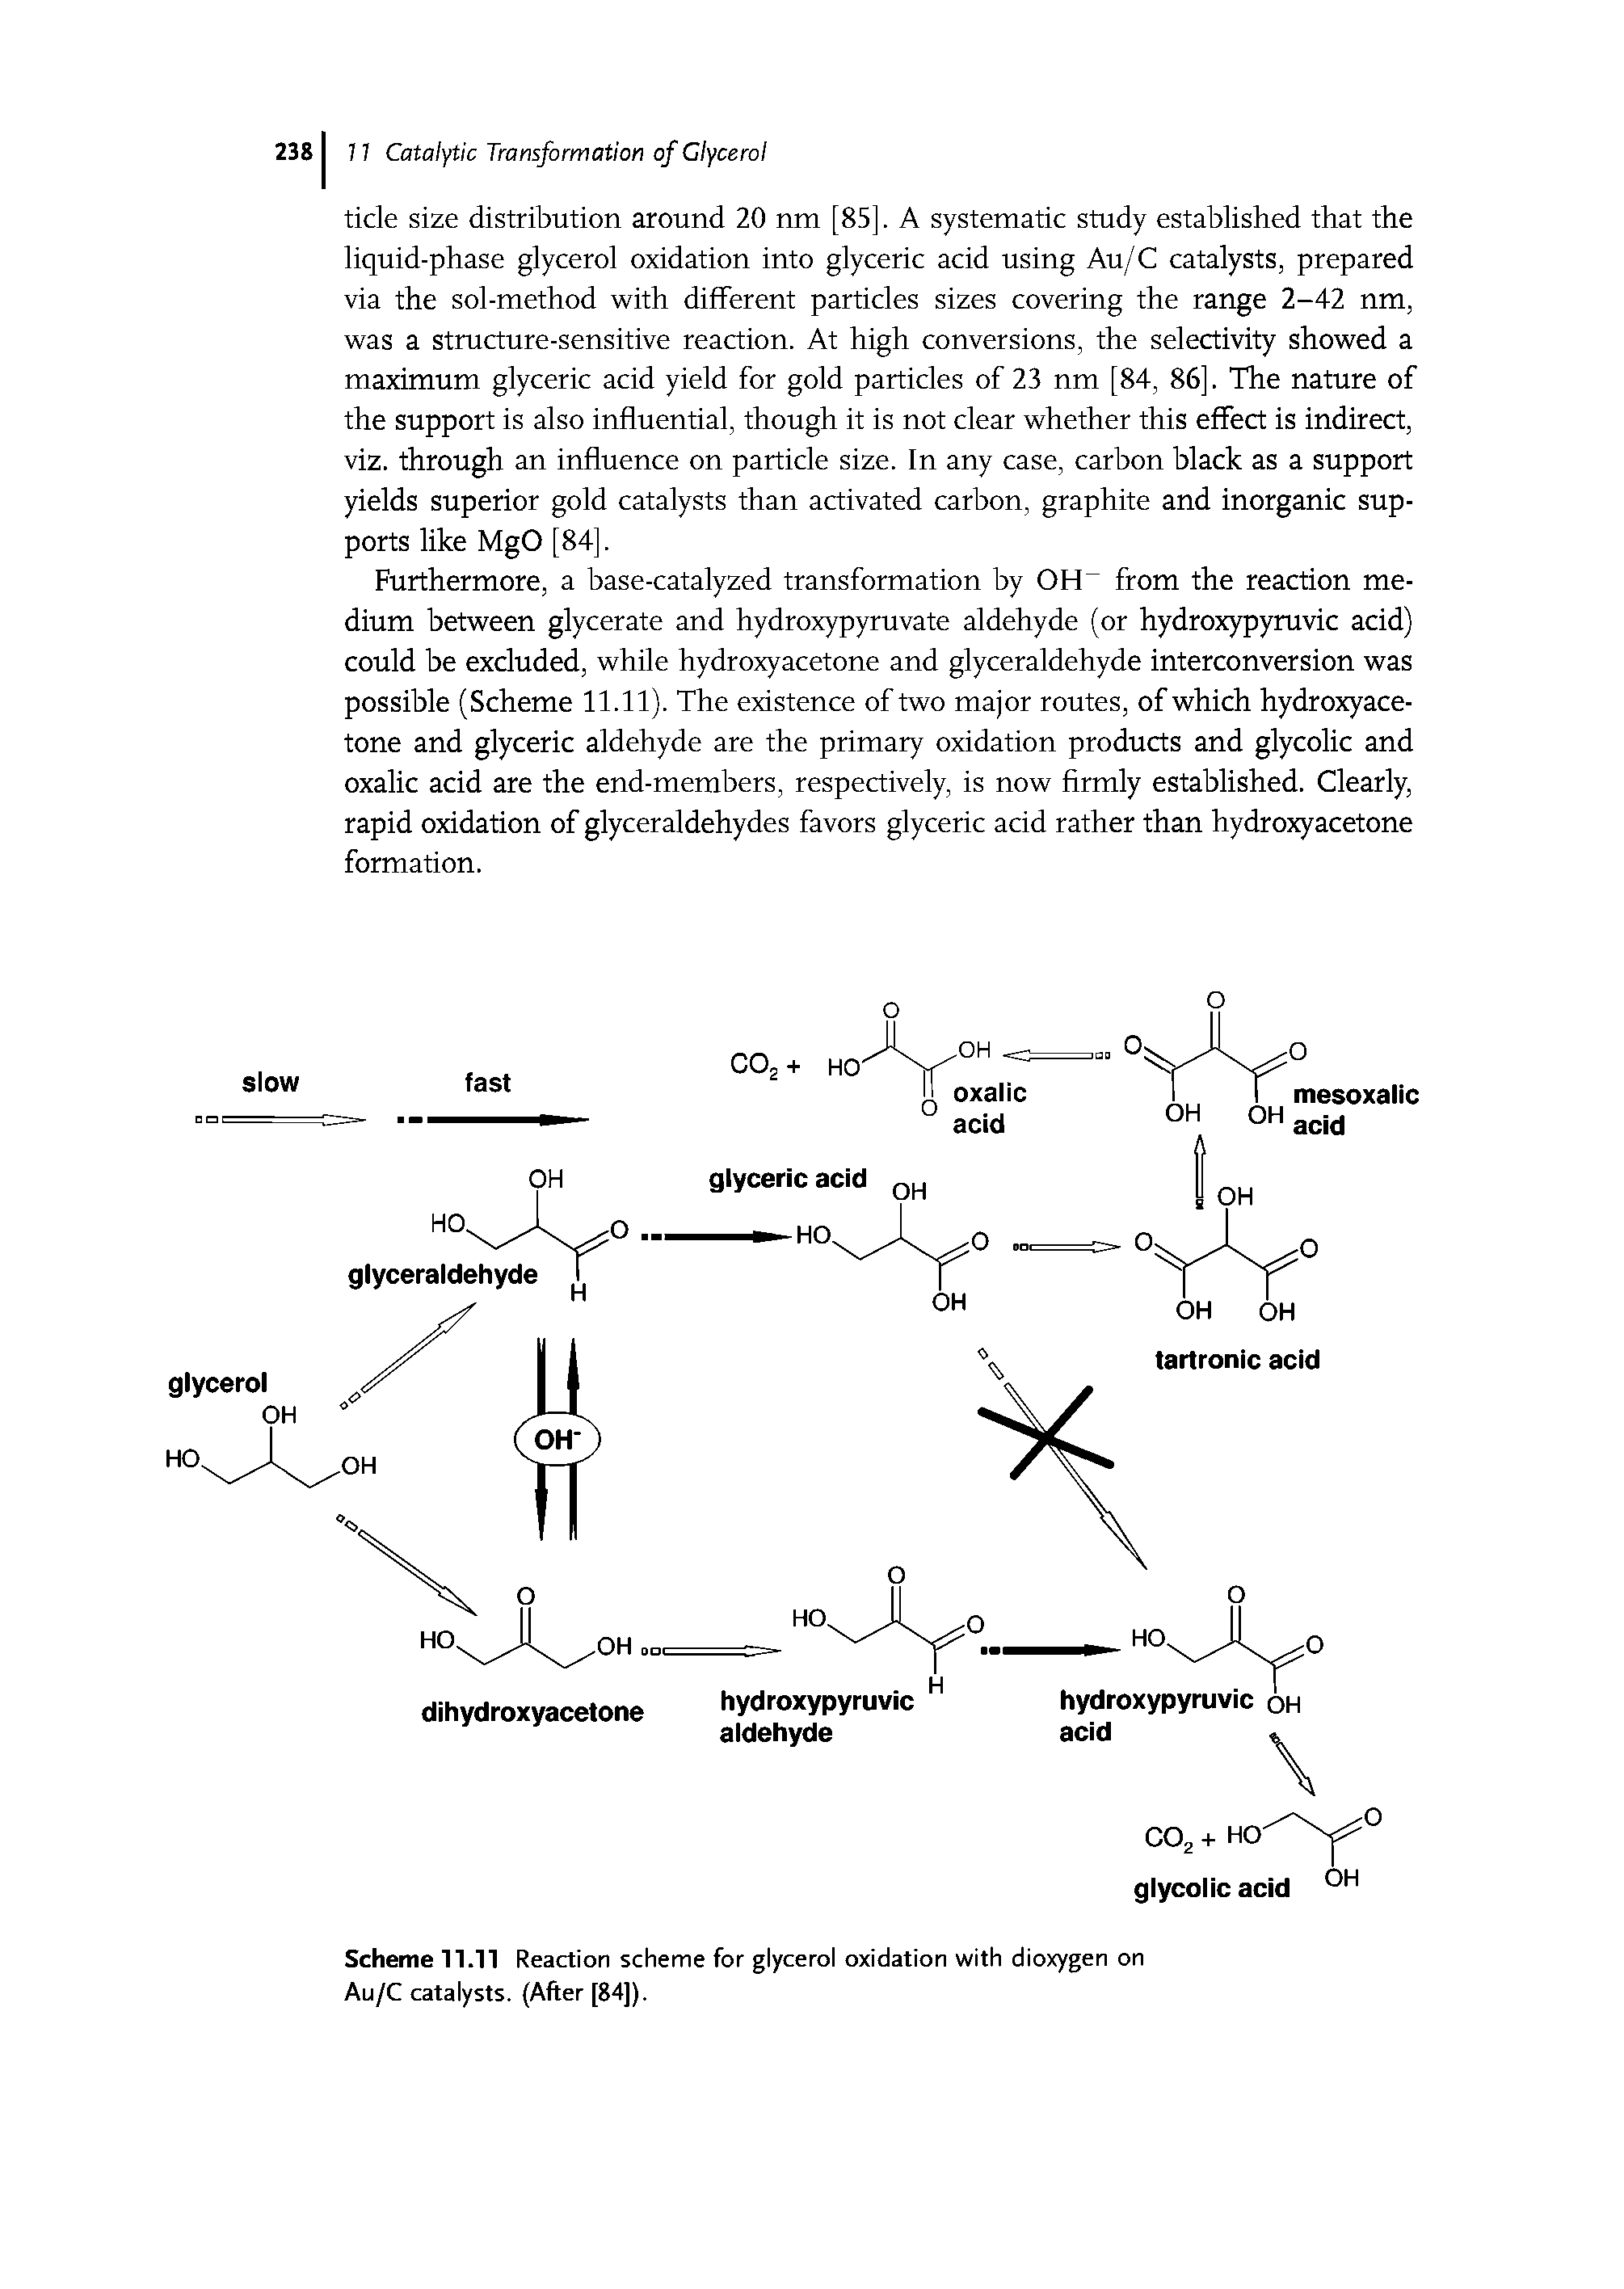 Scheme 11.11 Reaction scheme for glycerol oxidation with dioxygen on Au/C catalysts. (After [84]).